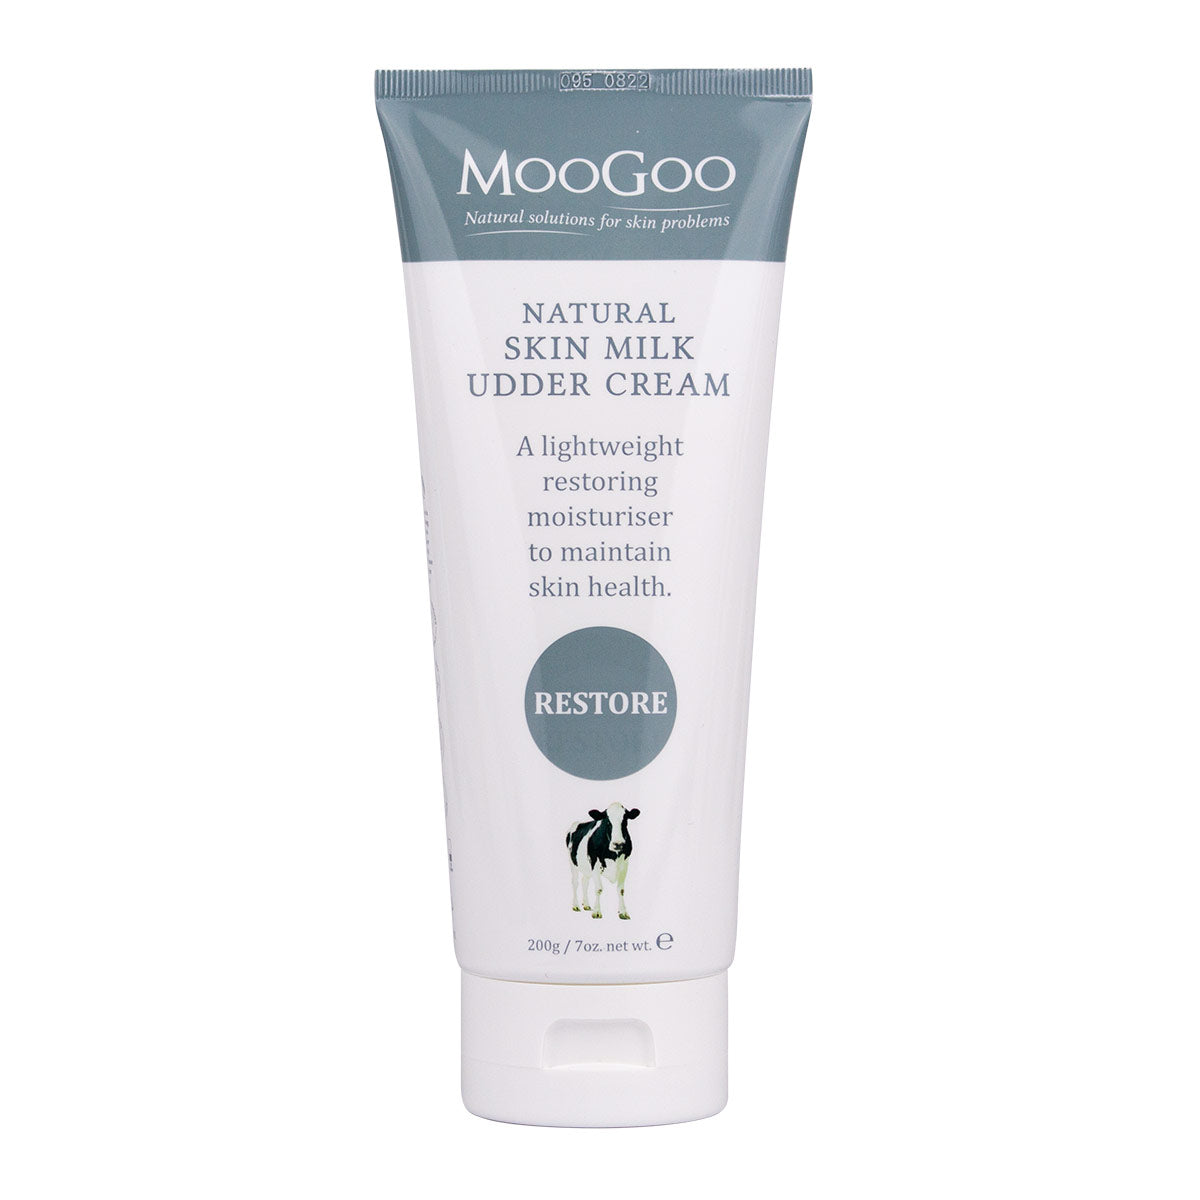 MooGoo - Skin Milk Udder Cream